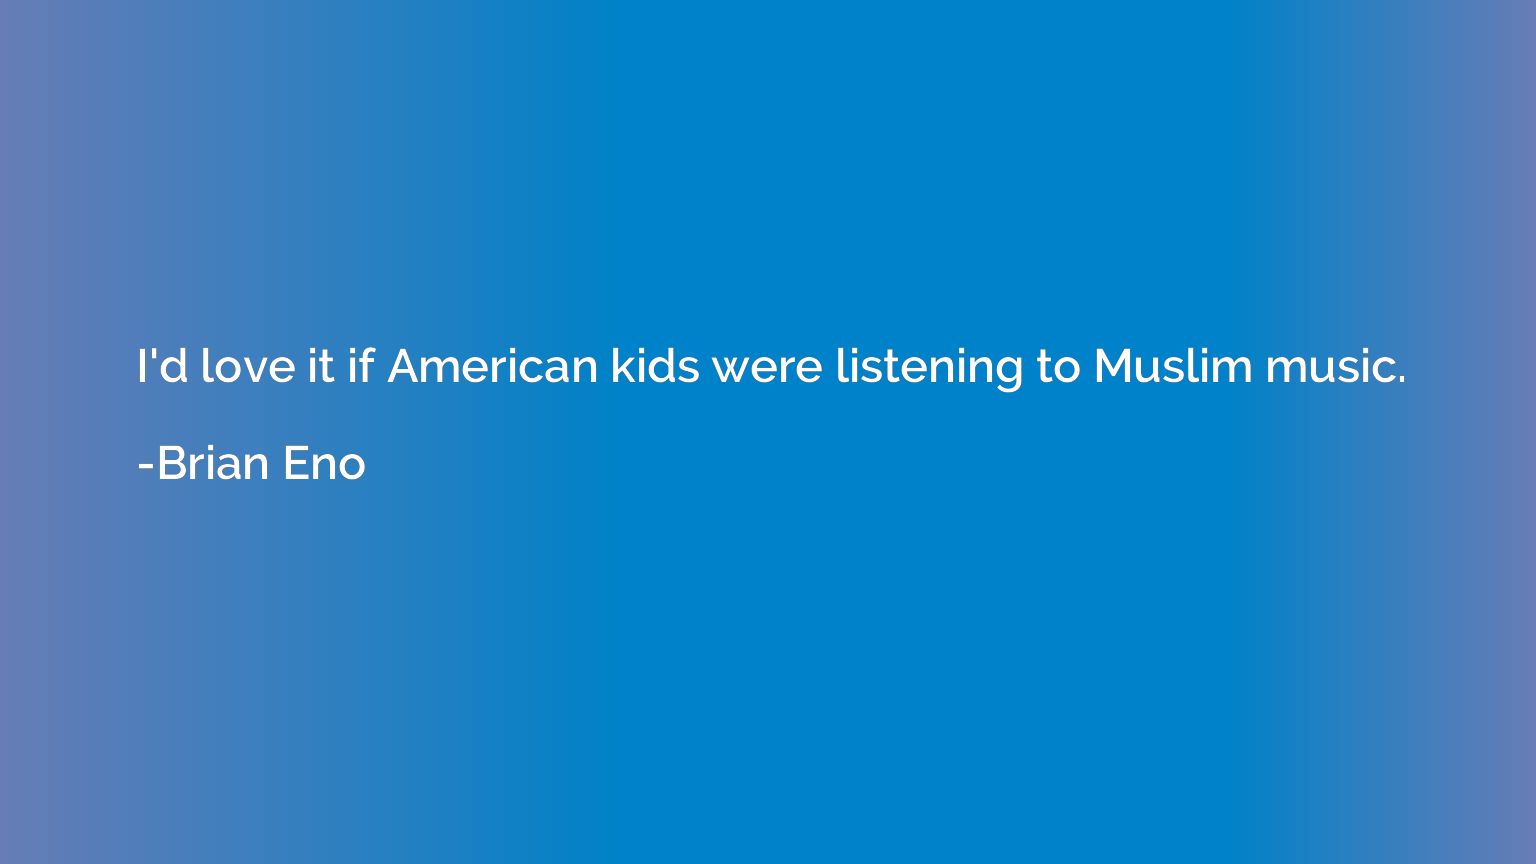 I'd love it if American kids were listening to Muslim music.